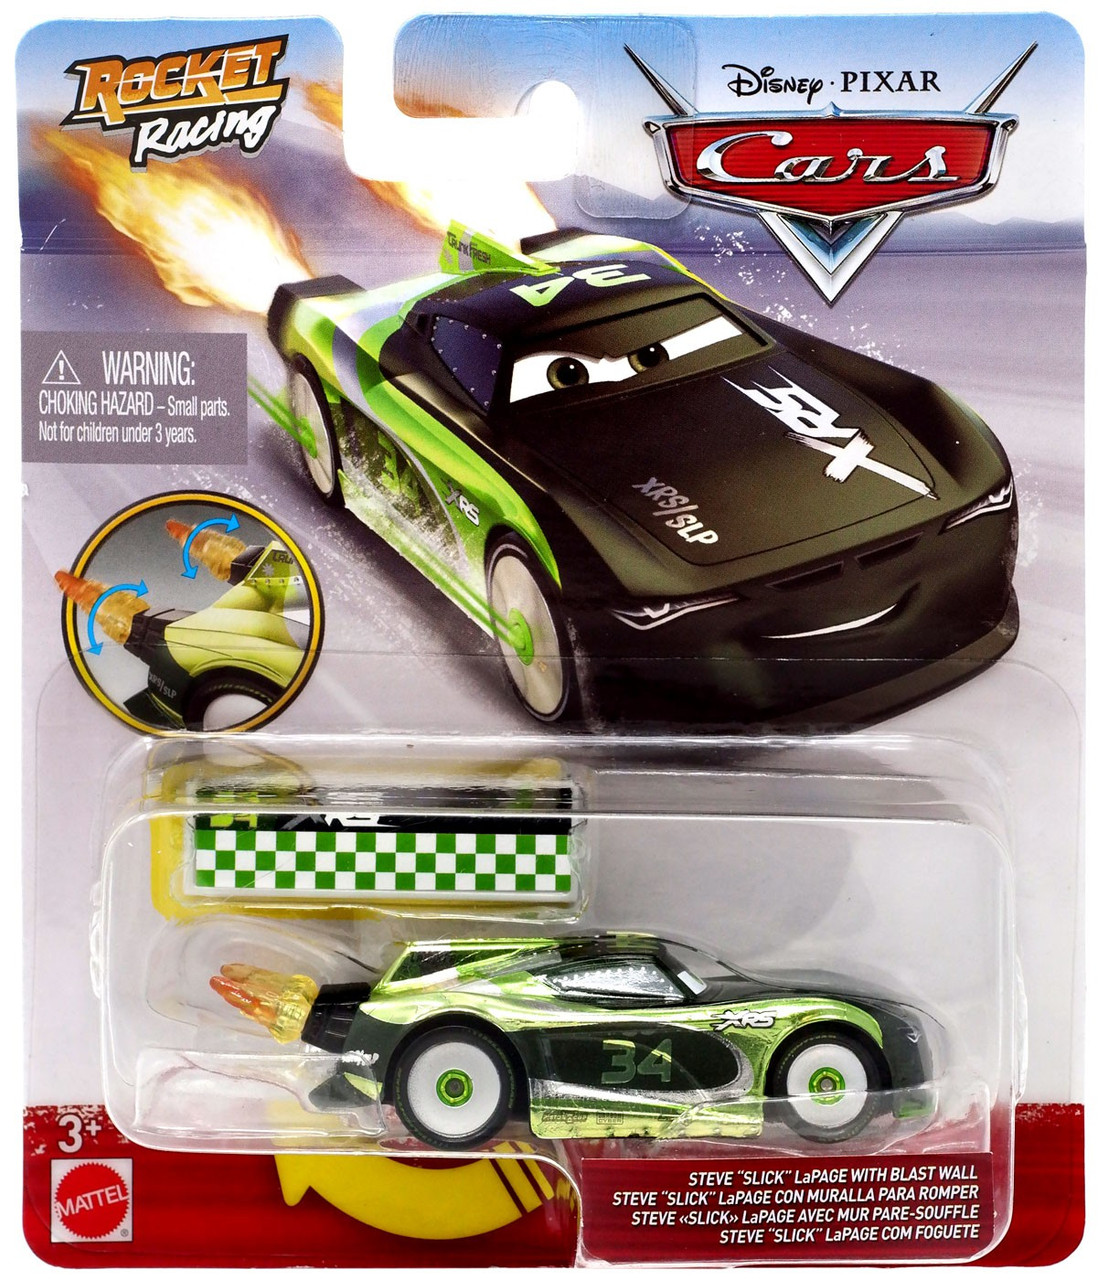 Disney Pixar Cars Cars 3 Rocket Racing Steve Slick Lapage With Blast Wall 155 Diecast Car Mattel Toys Toywiz - cars 3 racing roblox